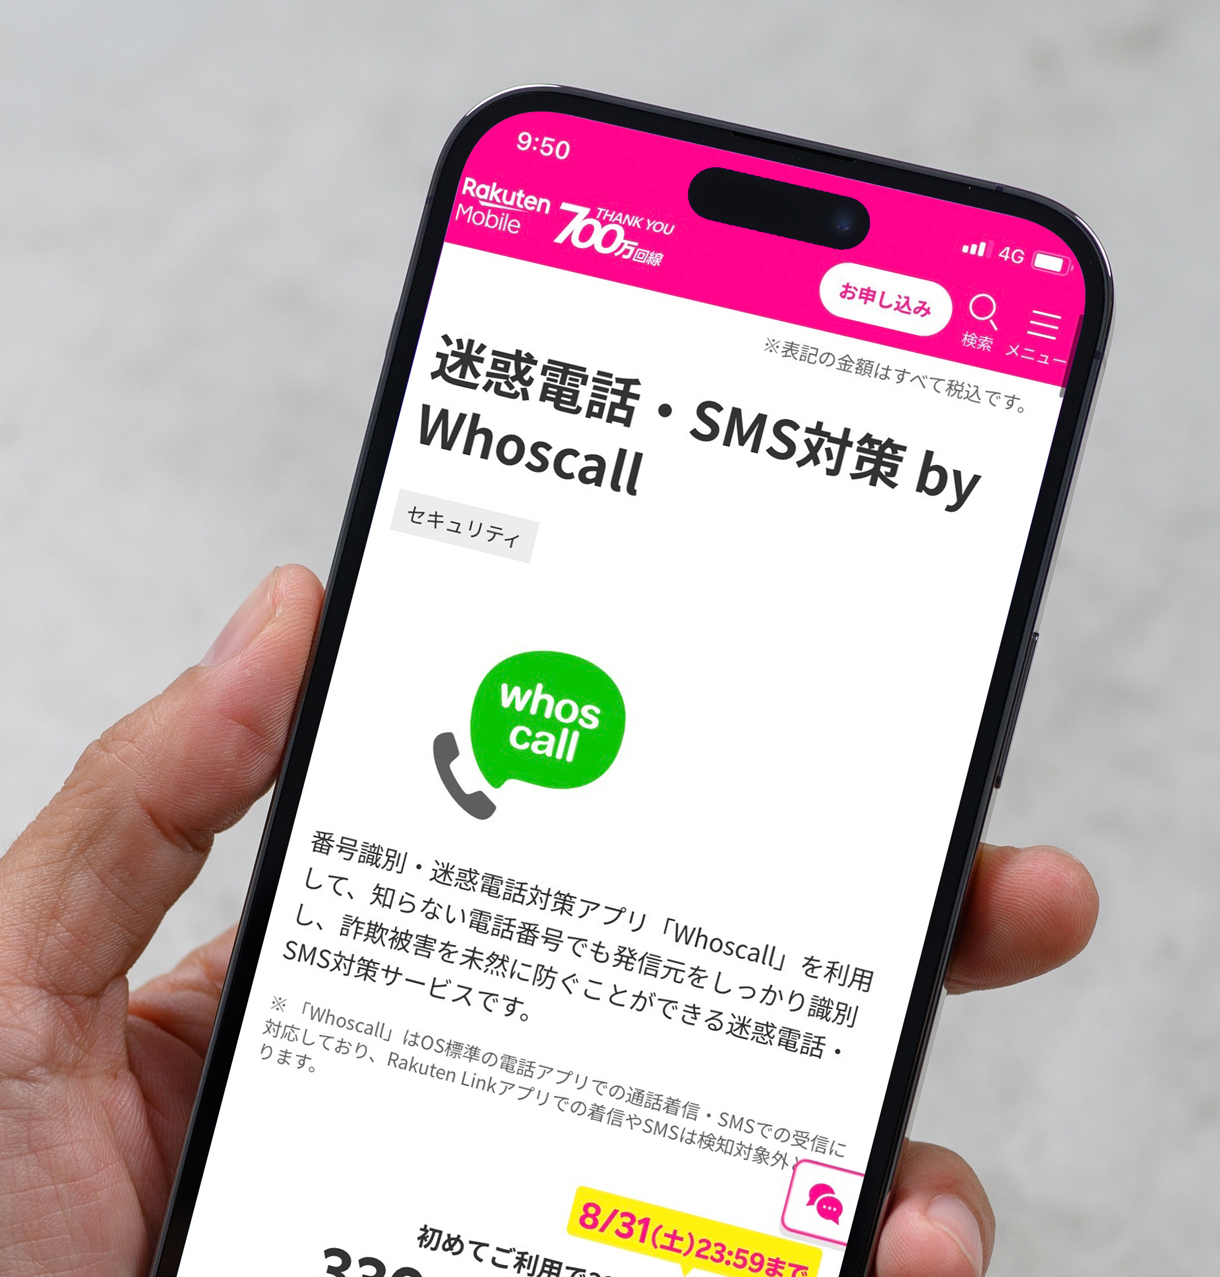 Gogolook Achieves Success in Japanese Market, Joins Rakuten Mobile Ecosystem